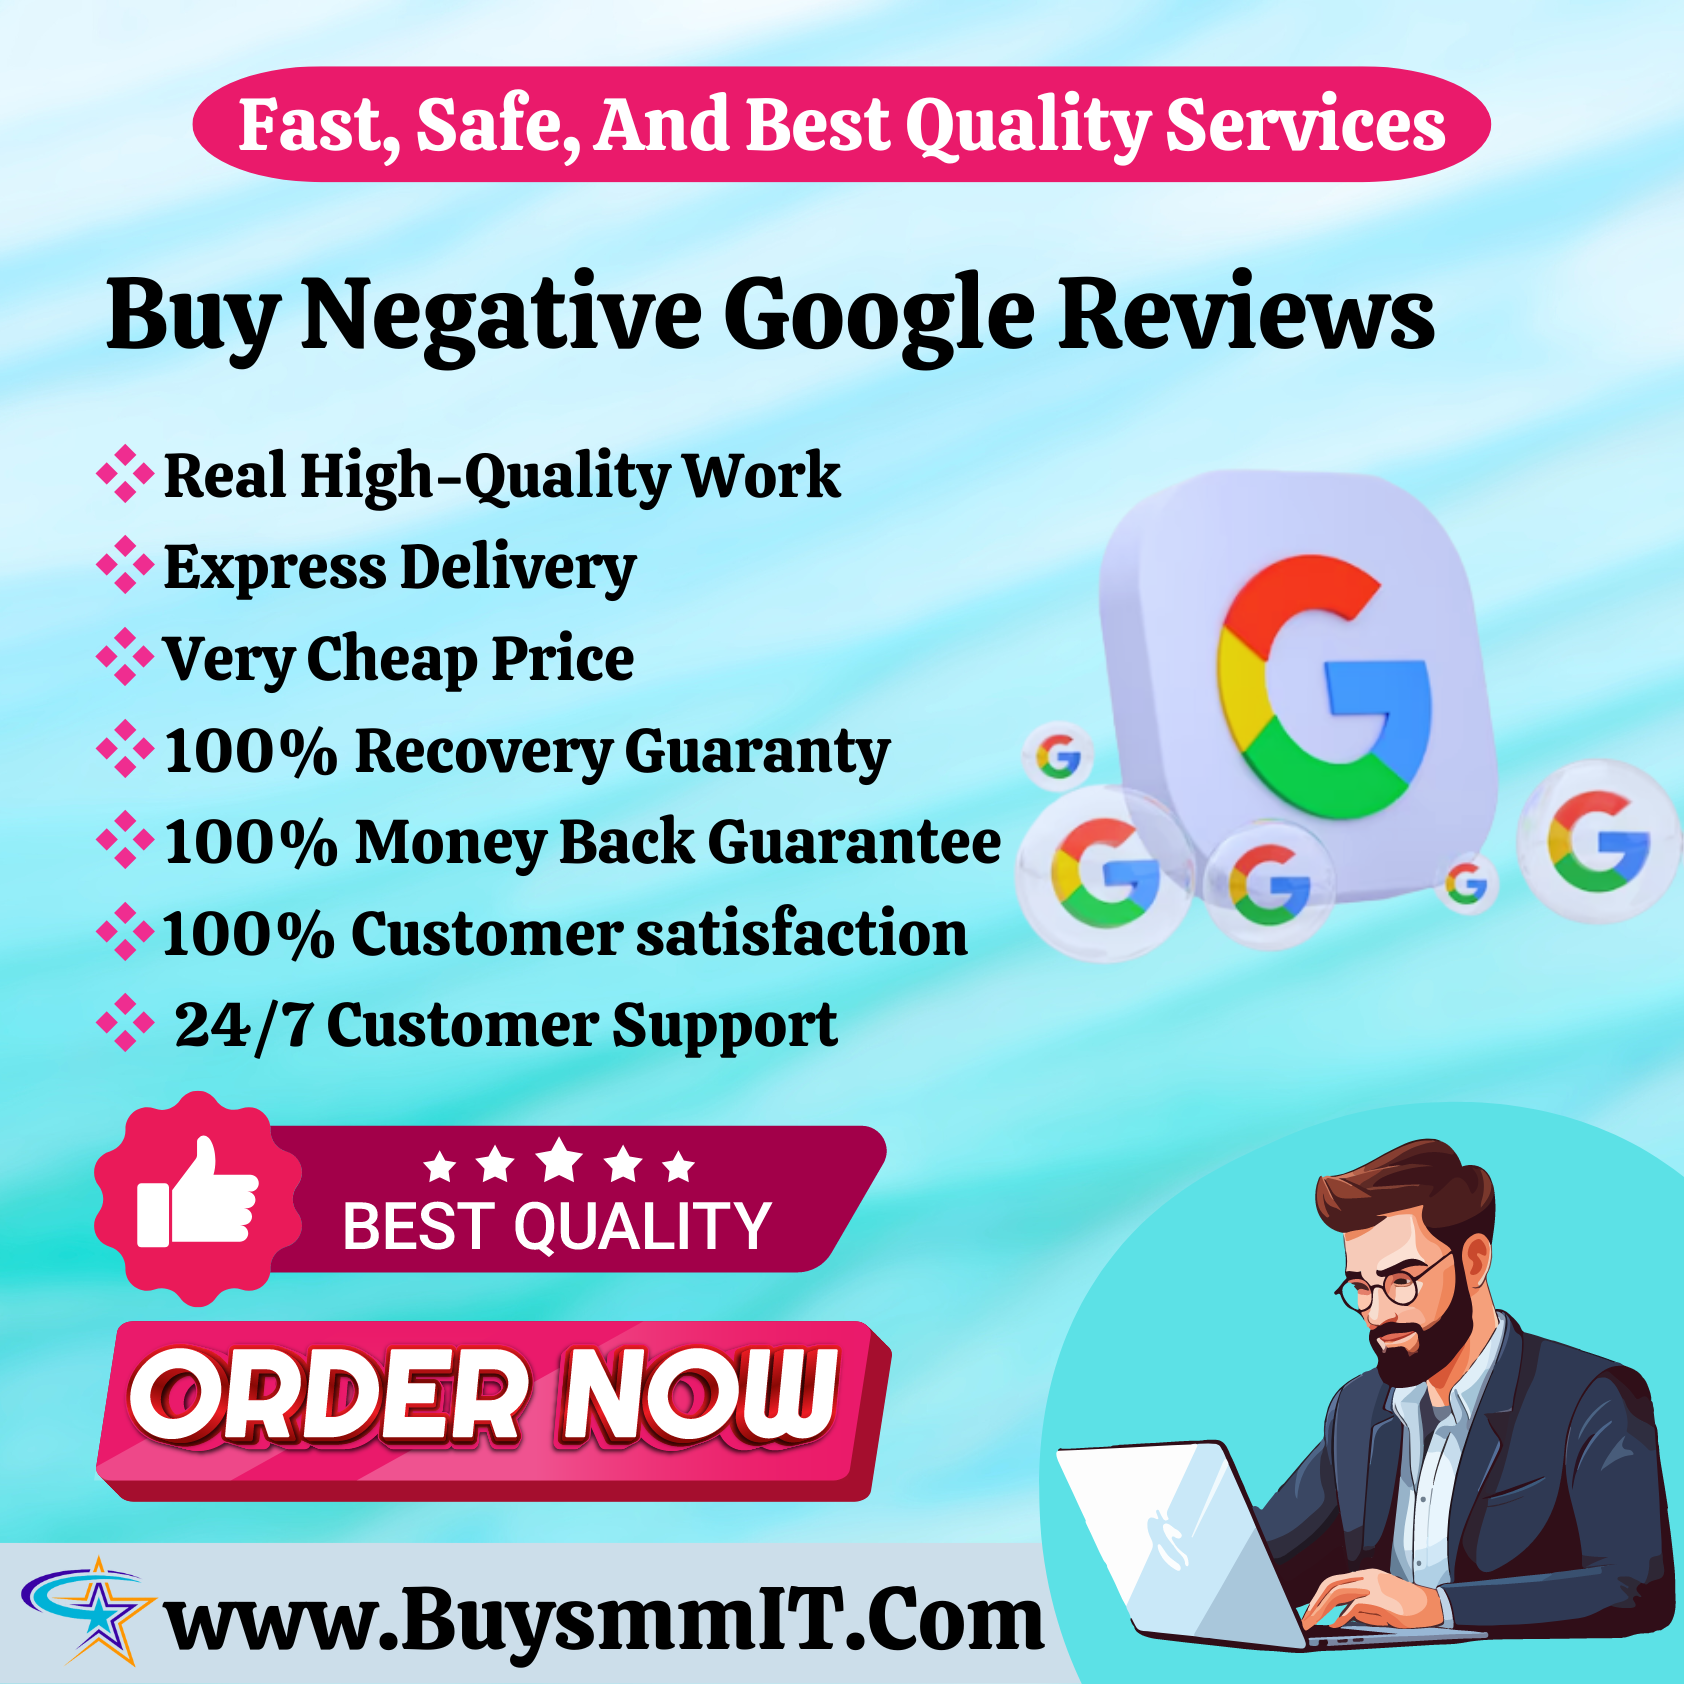 Buy Negative Google Reviews - 100% Satisfaction Guaranteed